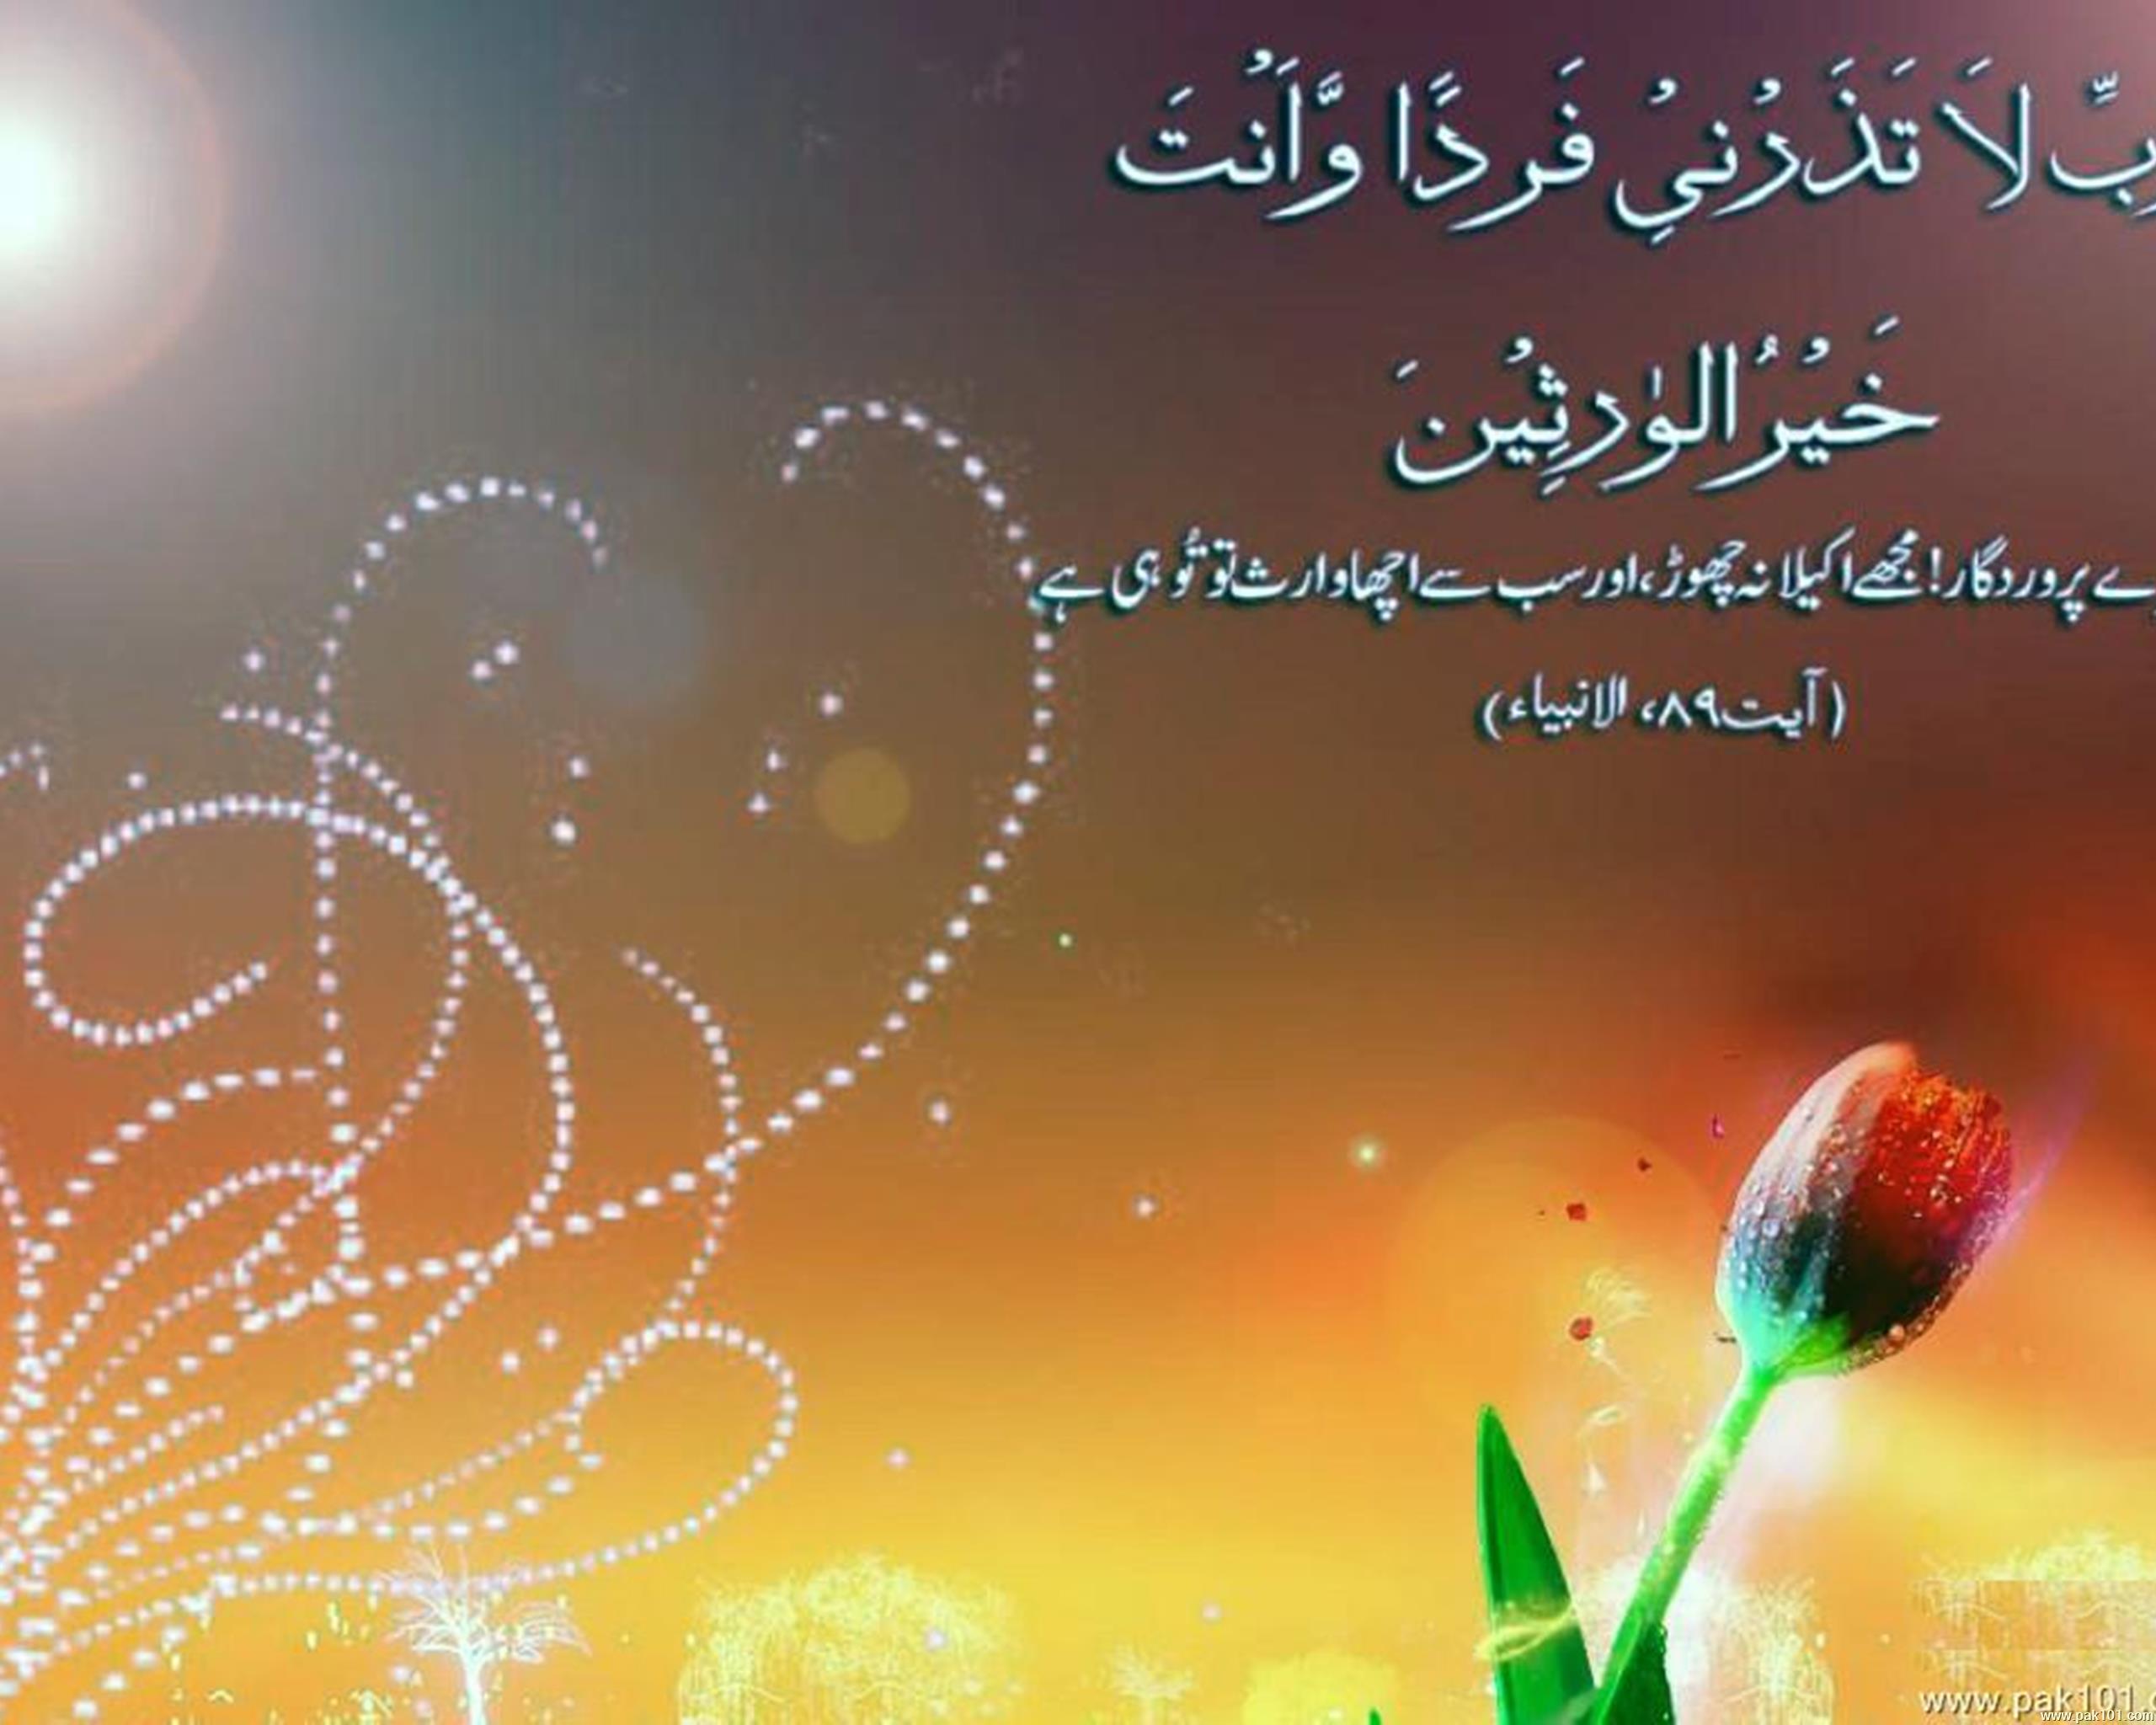 Qurani Ayat - Qurani Ayat Facebook Cover - HD Wallpaper 